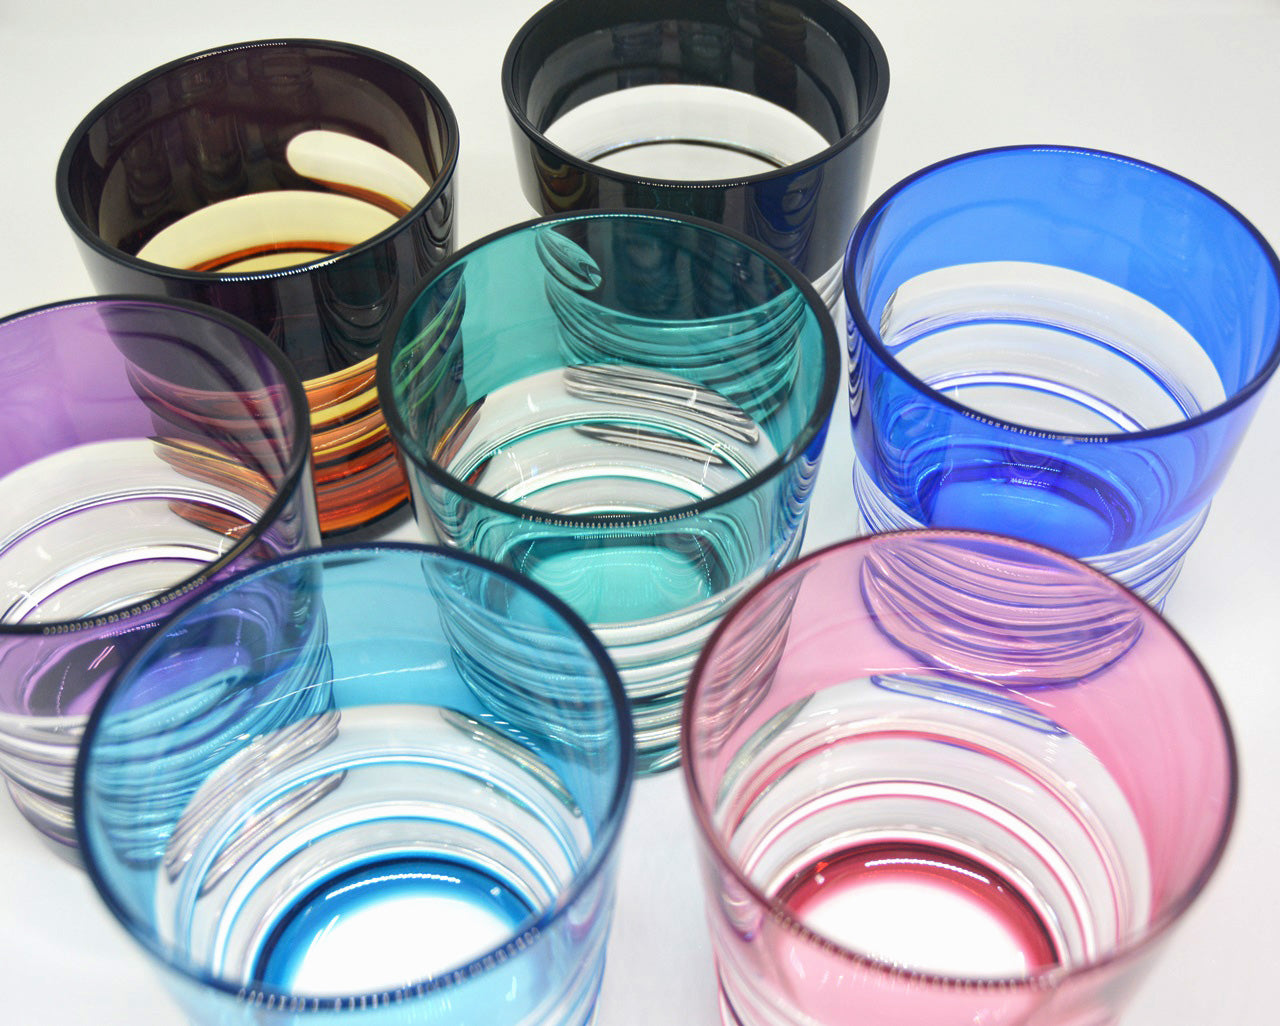 Drinking vessel, Old-fashioned glass, Hand-polished, Spiral, Black - Hidetaka Shimizu, Edo kiriko cut glass